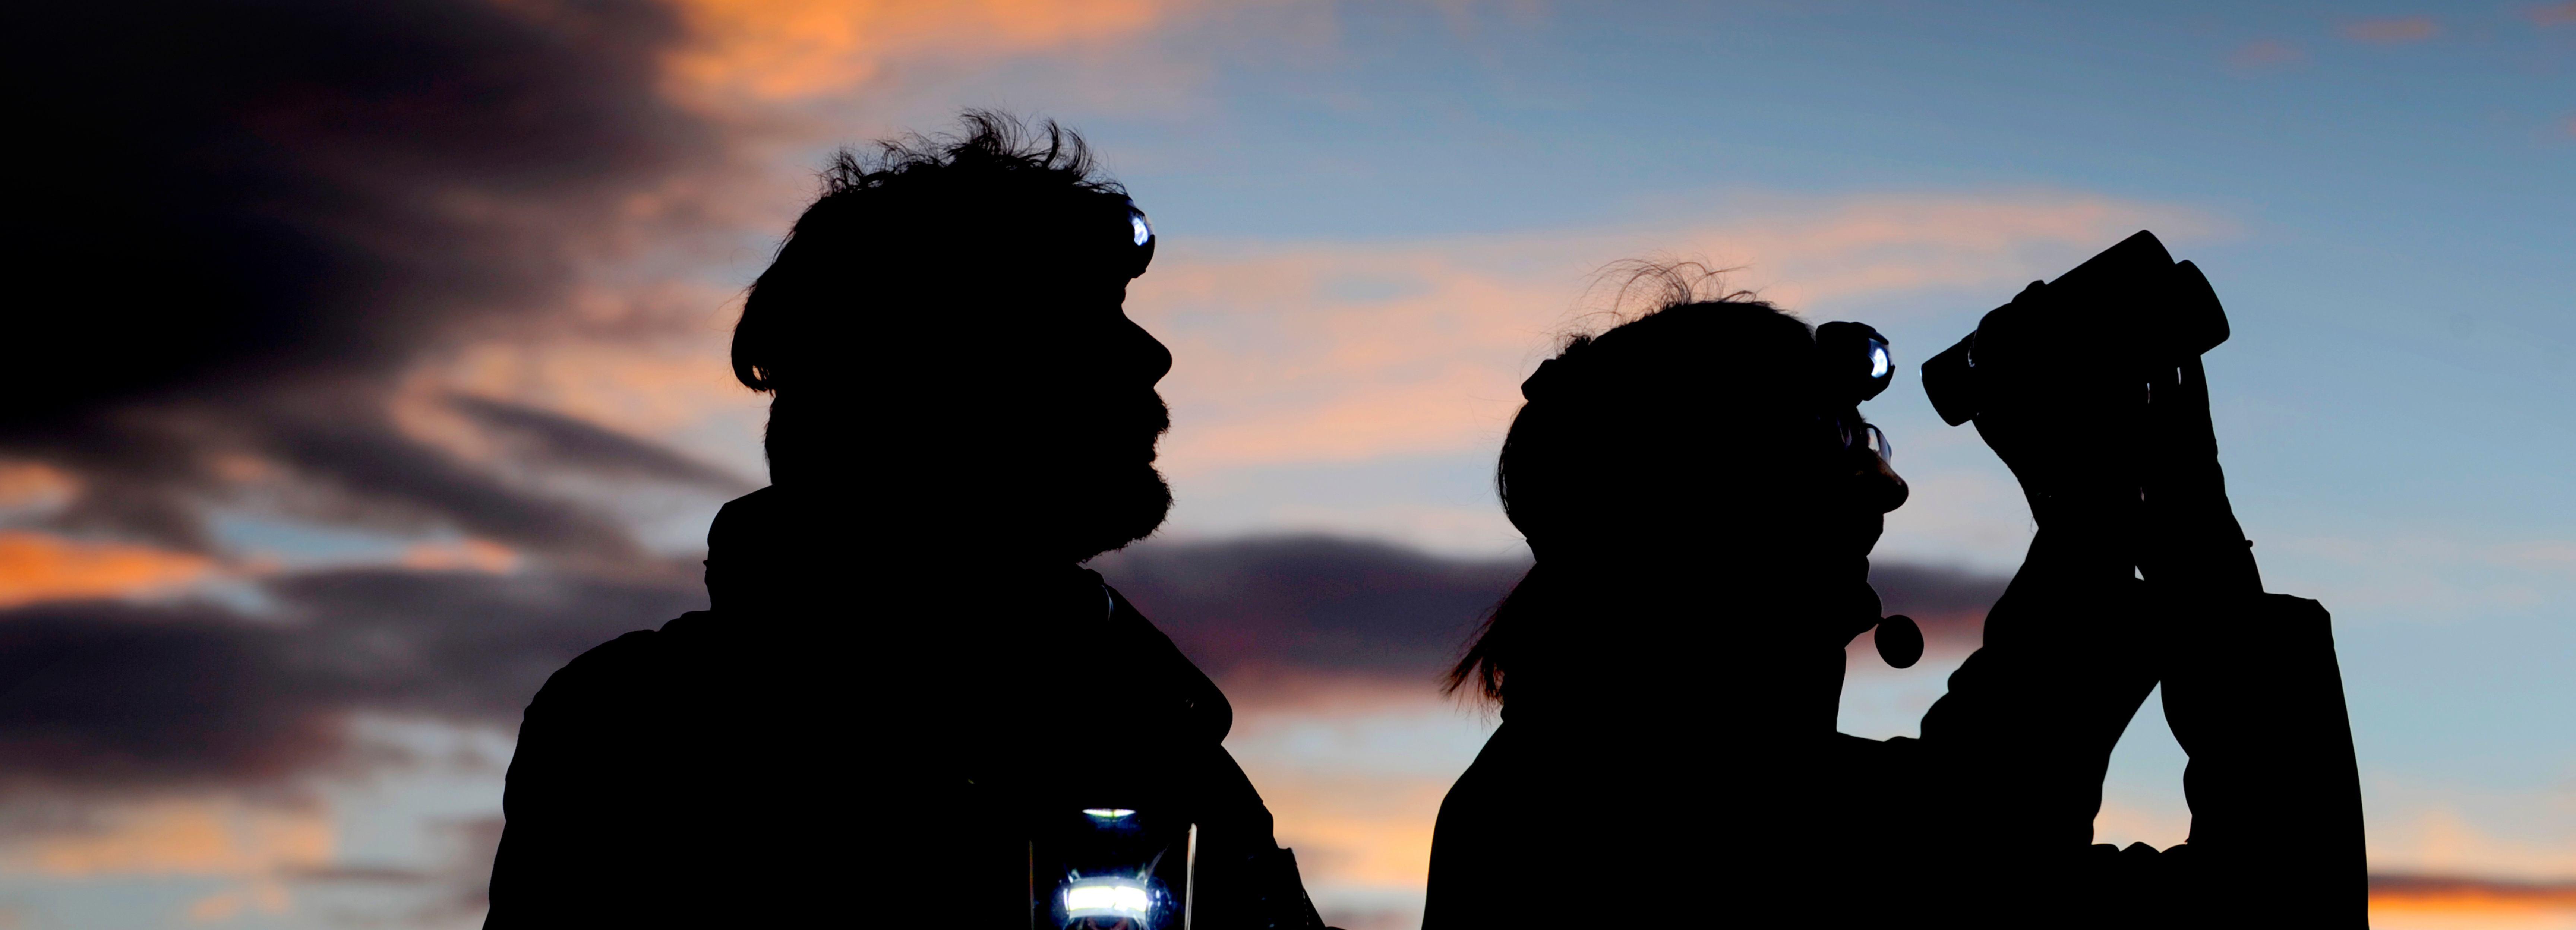 Dan Richards and Elizabeth Tindal in silhouette against a sunset sky. Elizabeth is holding up binoculars.